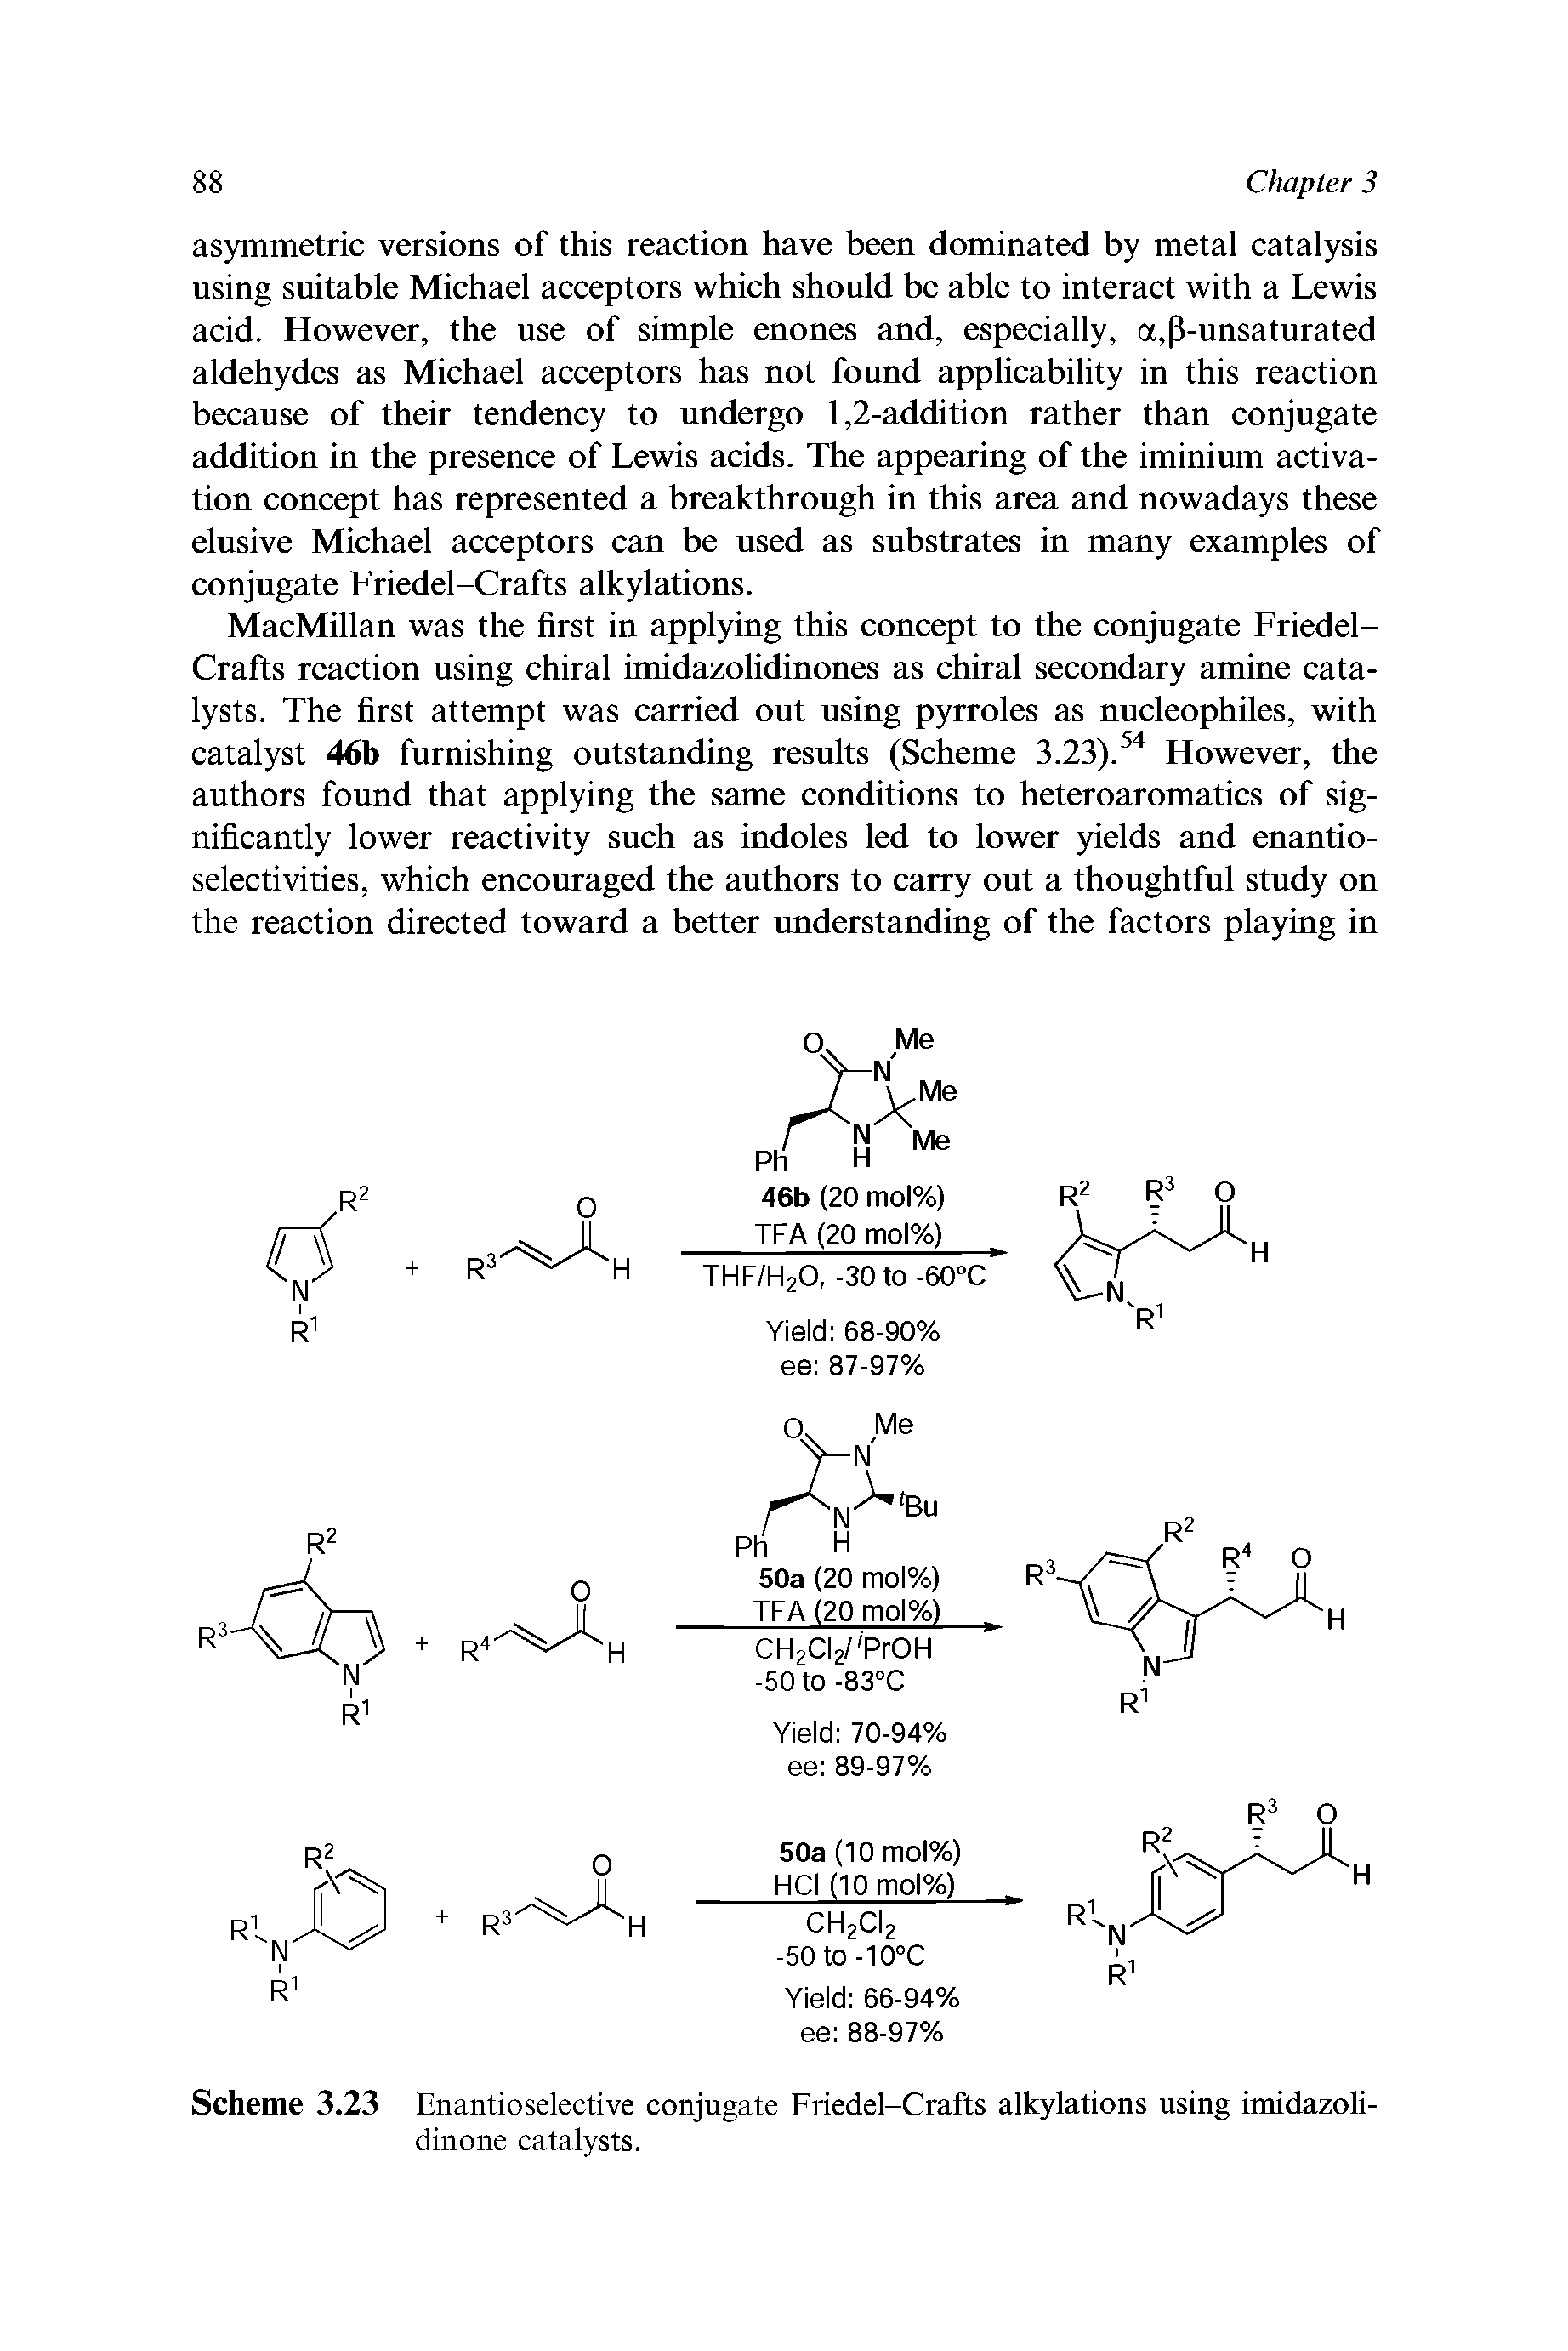 Scheme 3.23 Enantioselective conjugate Friedel-Crafts alkylations using itnidazoli-dinone catalysts.